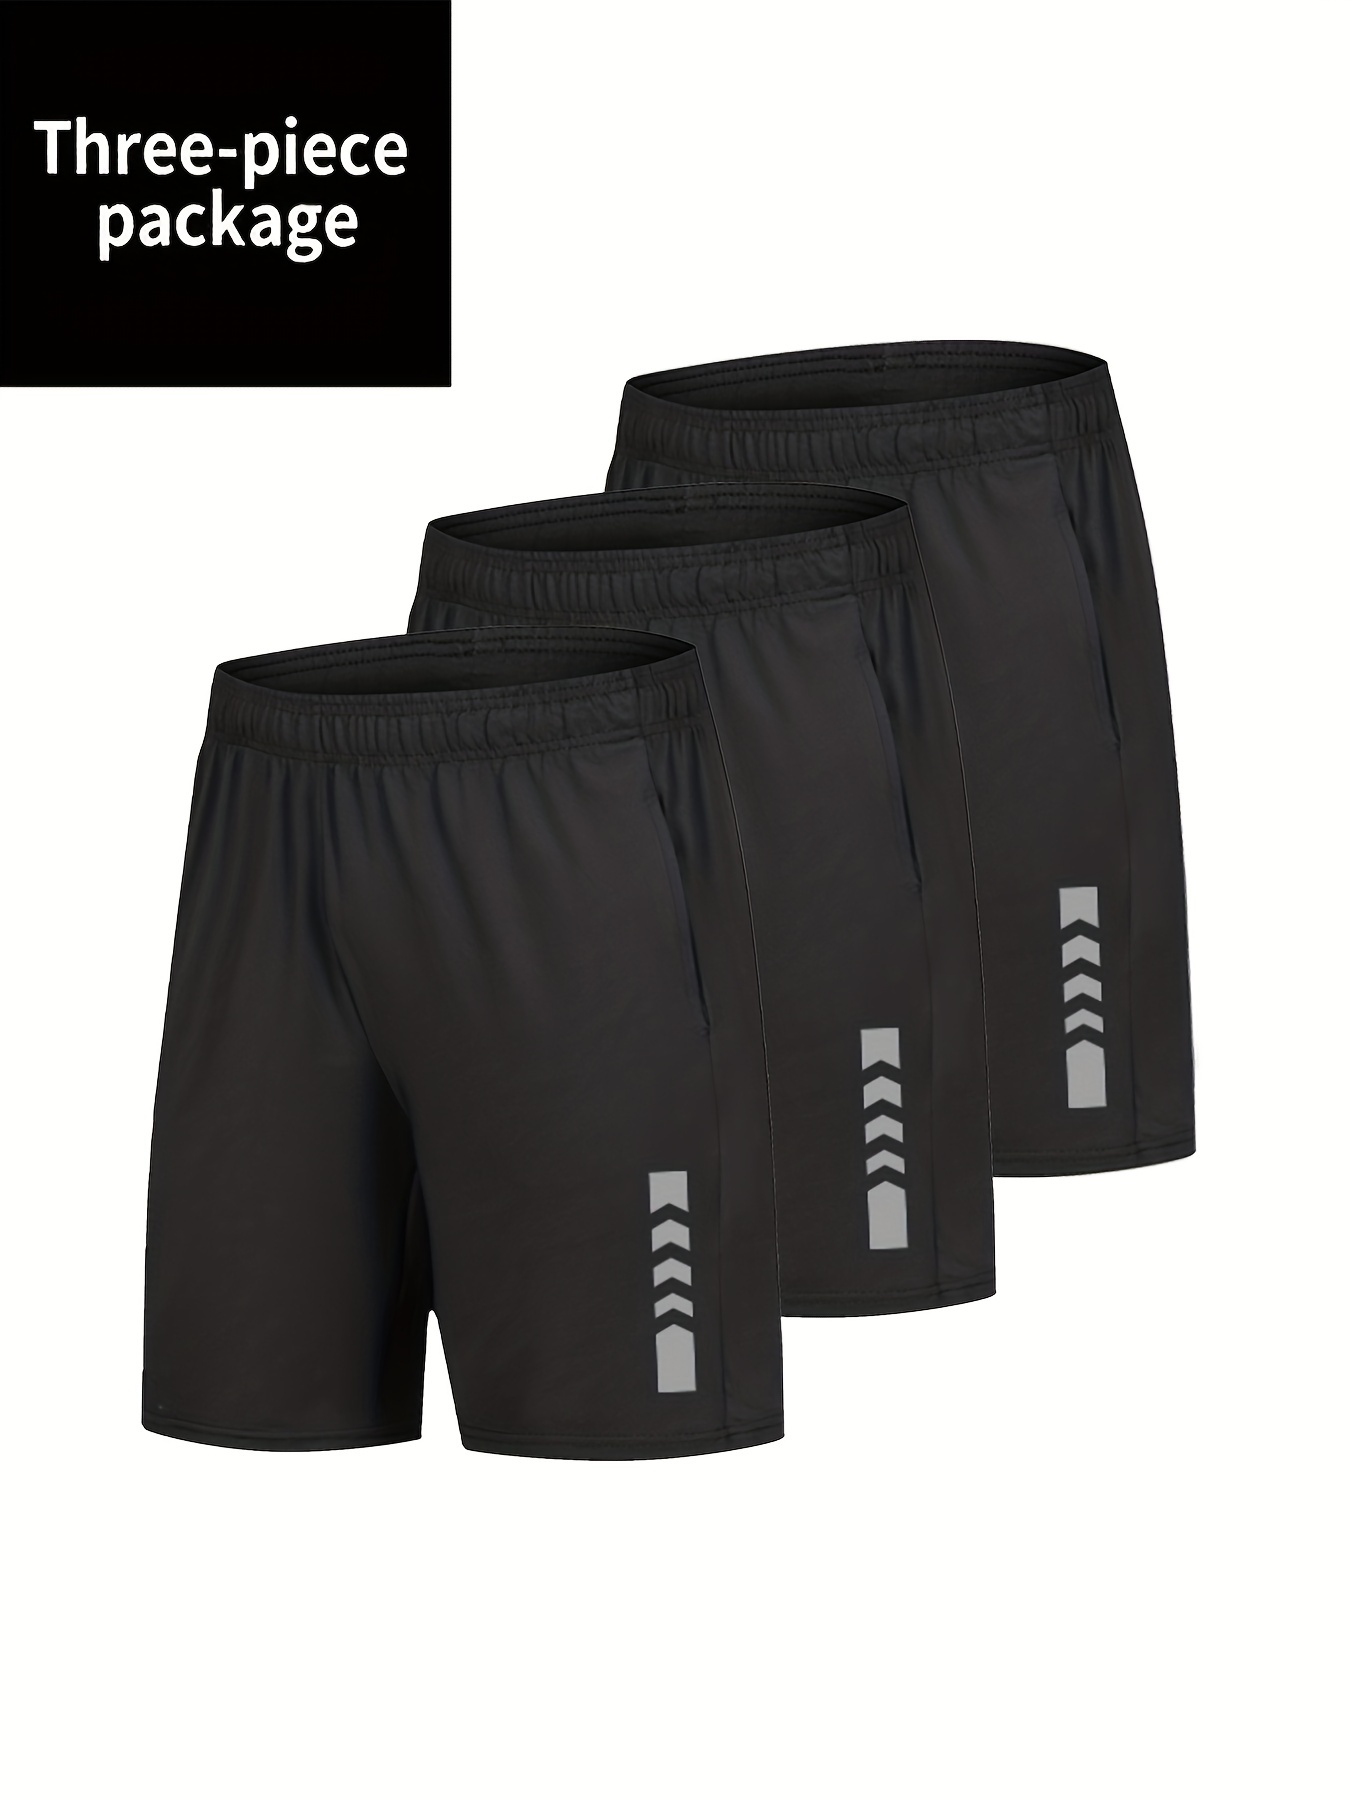 Men's Running Breathable Shorts Dry - black